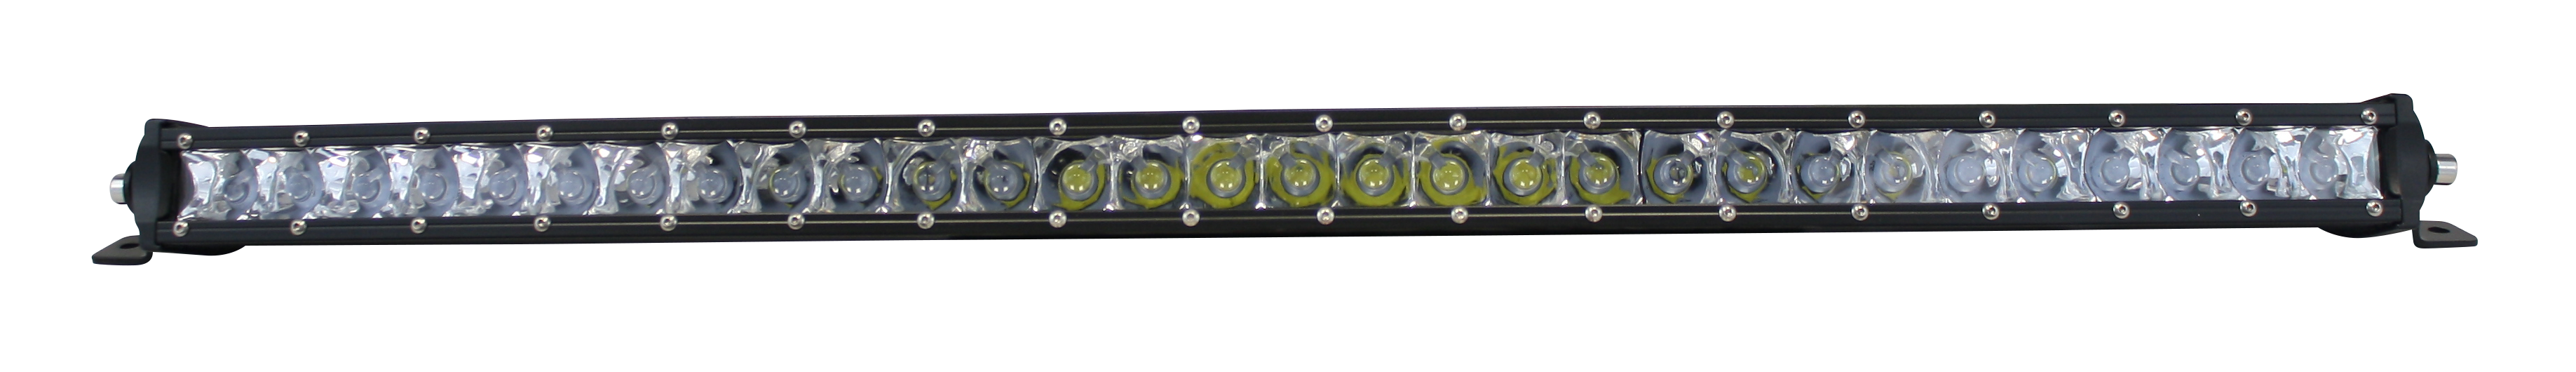 SpeedDemon 31.5" SRX Curved Light Bar